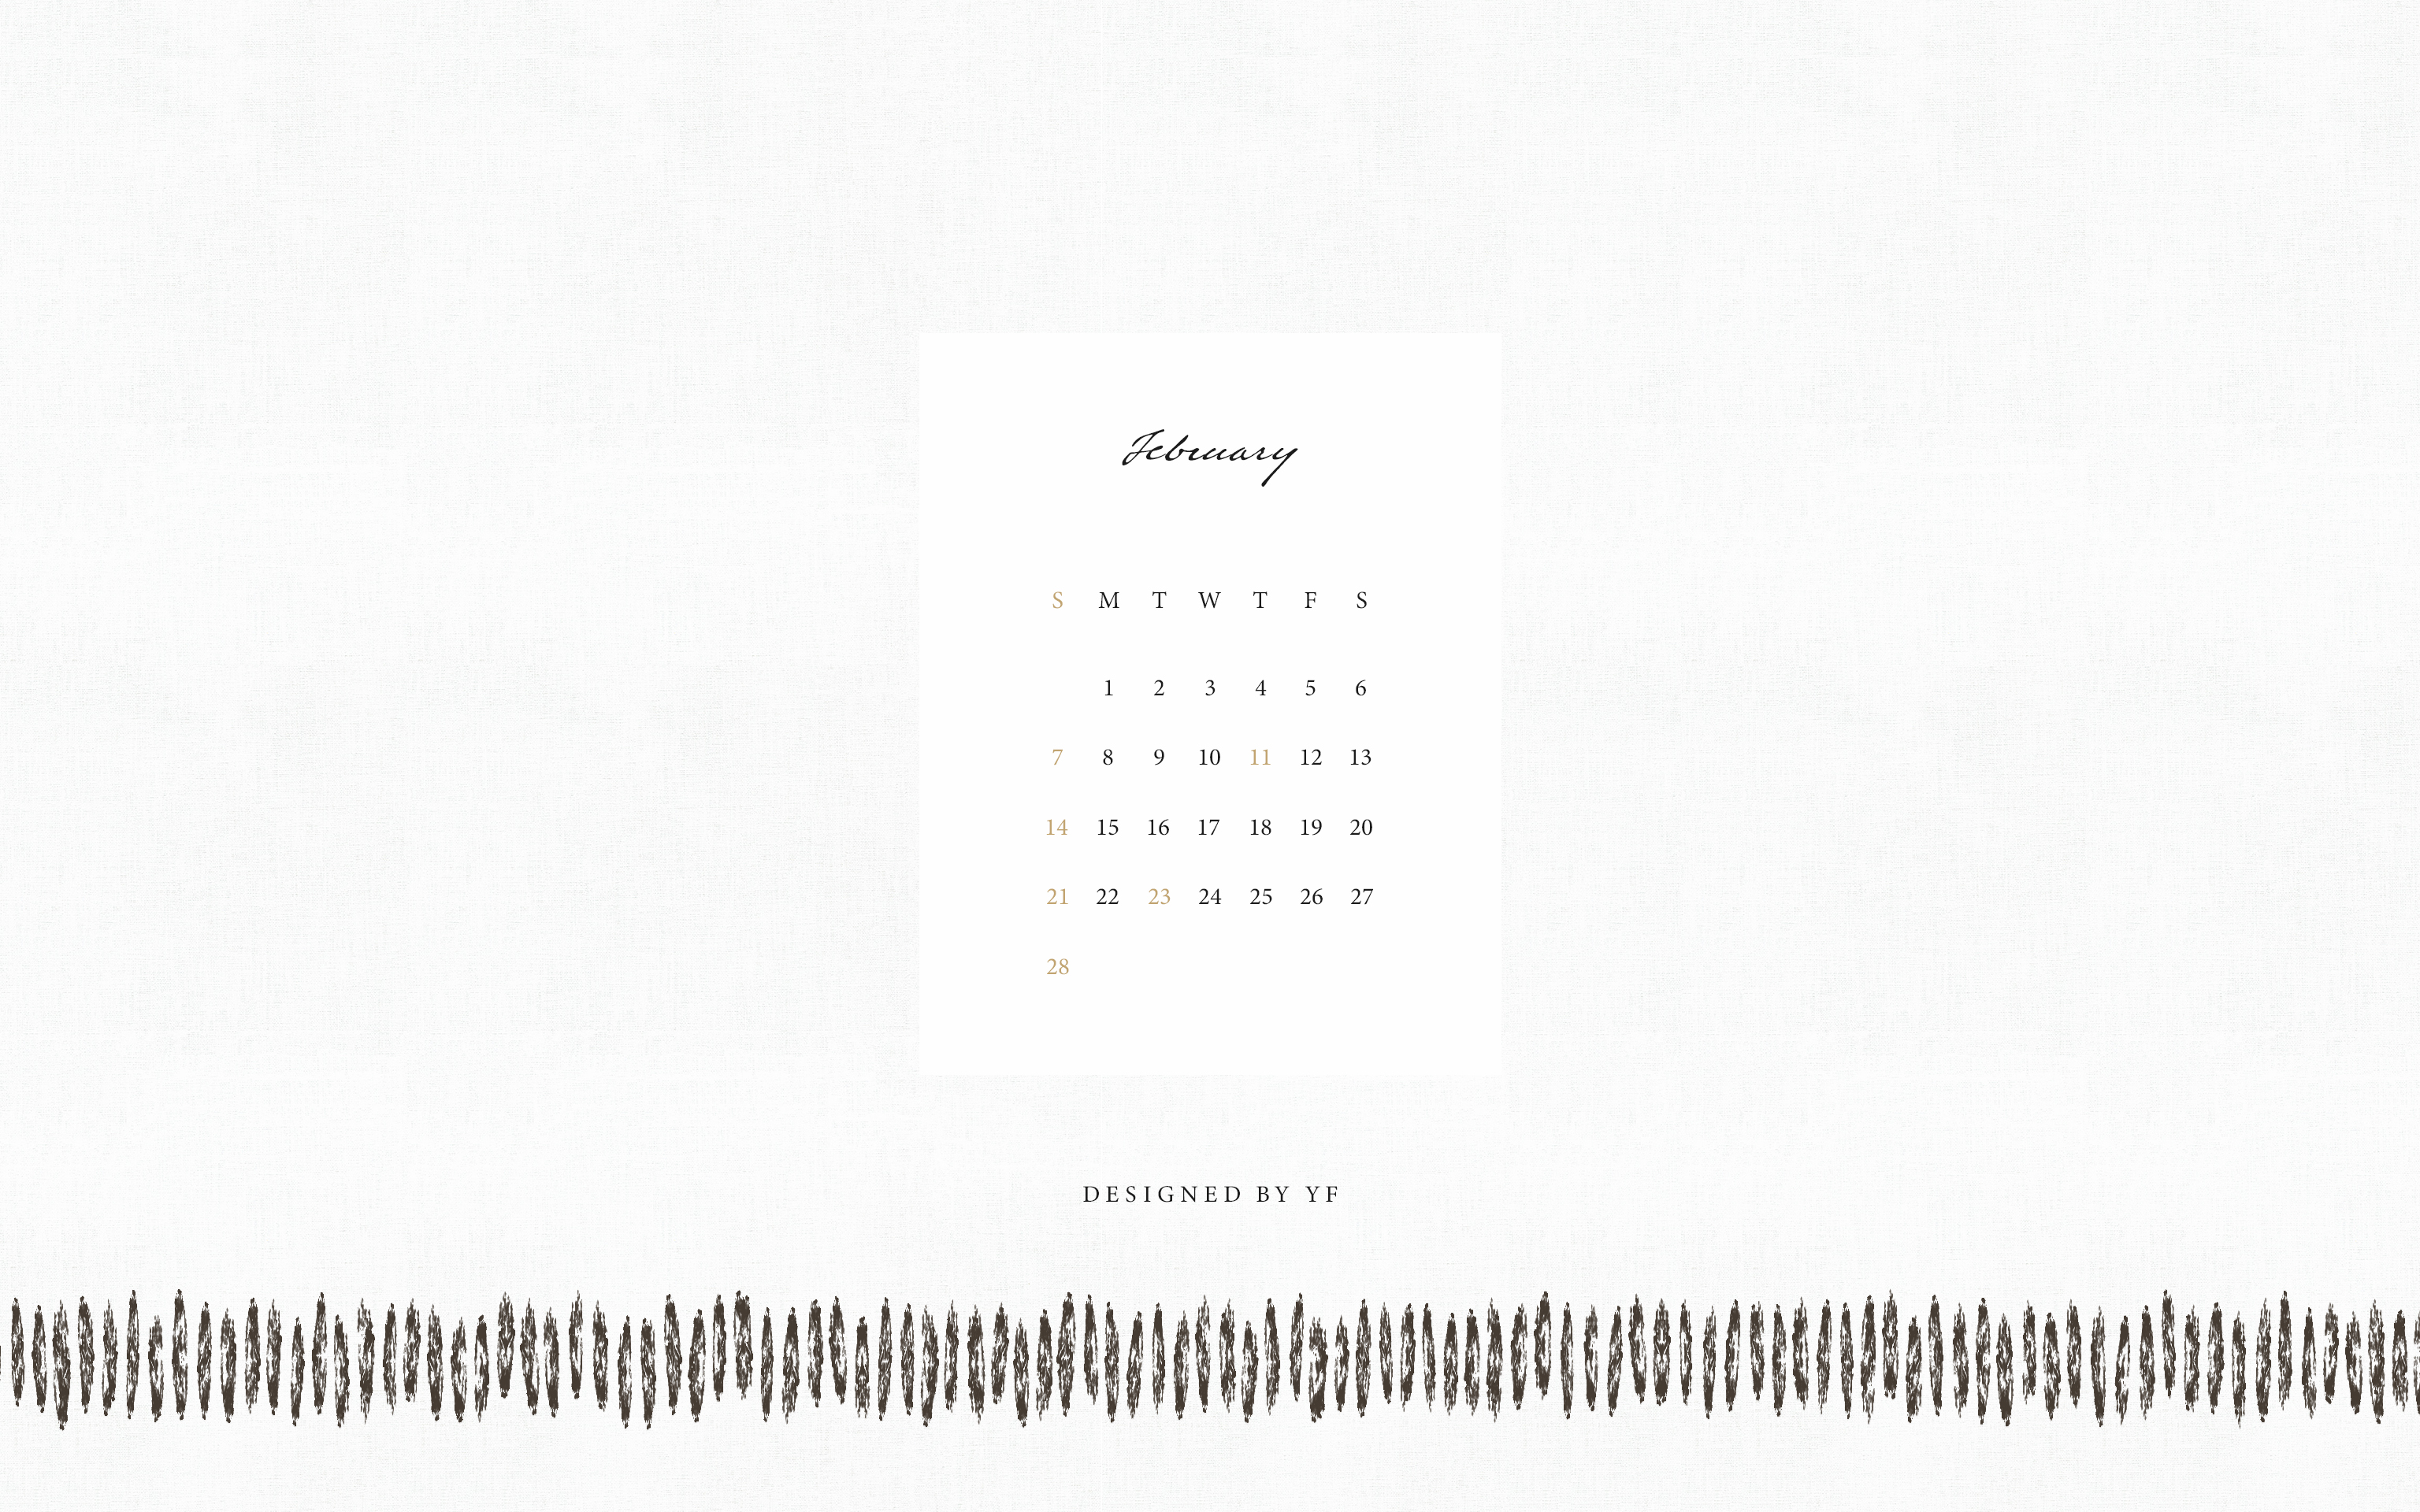 February 21 Calendar Wallpaper For Imac And Macbook Design By Yf